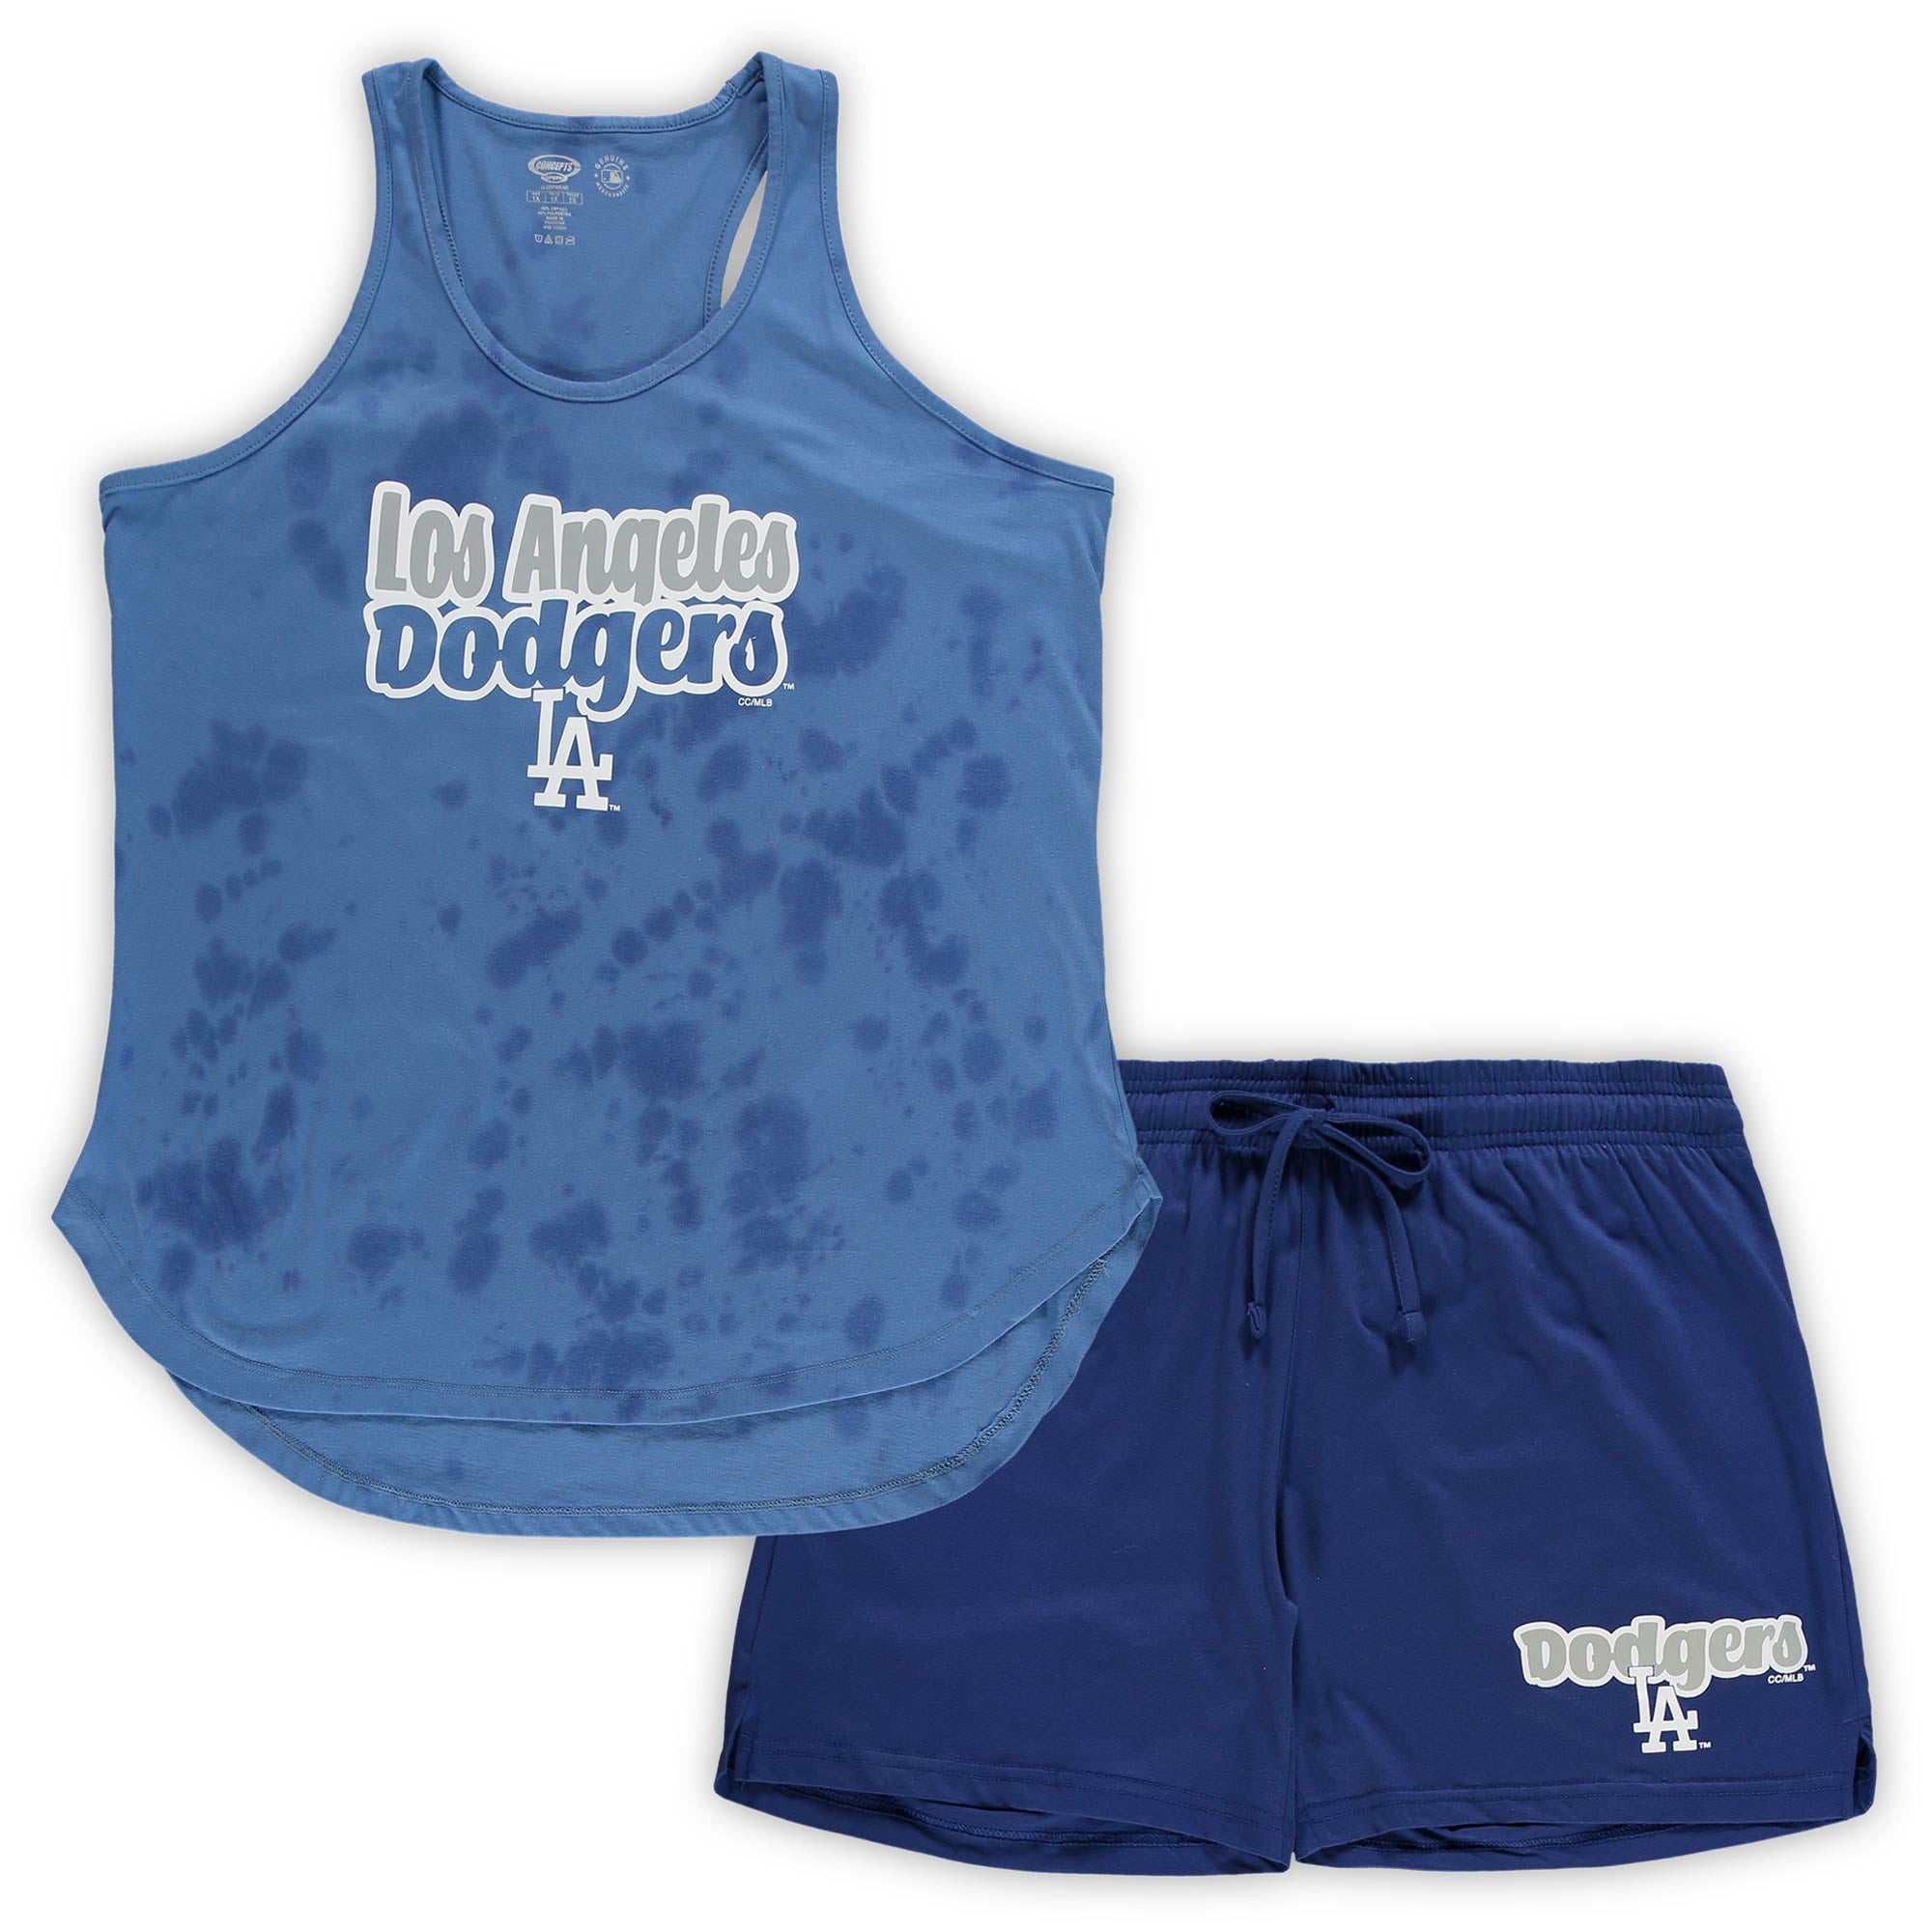 Fanatics Branded Women's Fanatics Branded Heather Royal Los Angeles Dodgers  Quick Out Tri-Blend Raglan Notch Neck T-Shirt